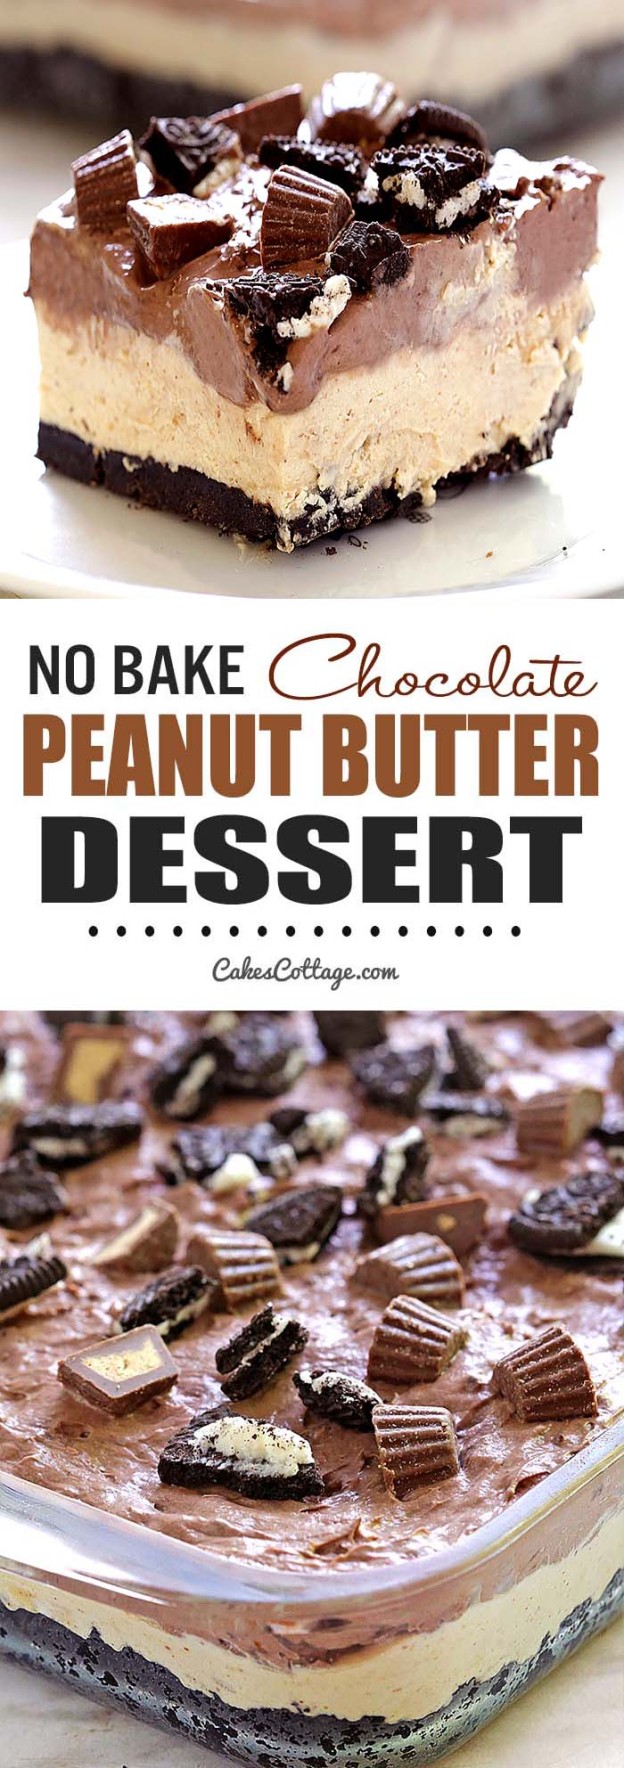 No Bake Chocolate Peanut Butter Dessert - Cakescottage